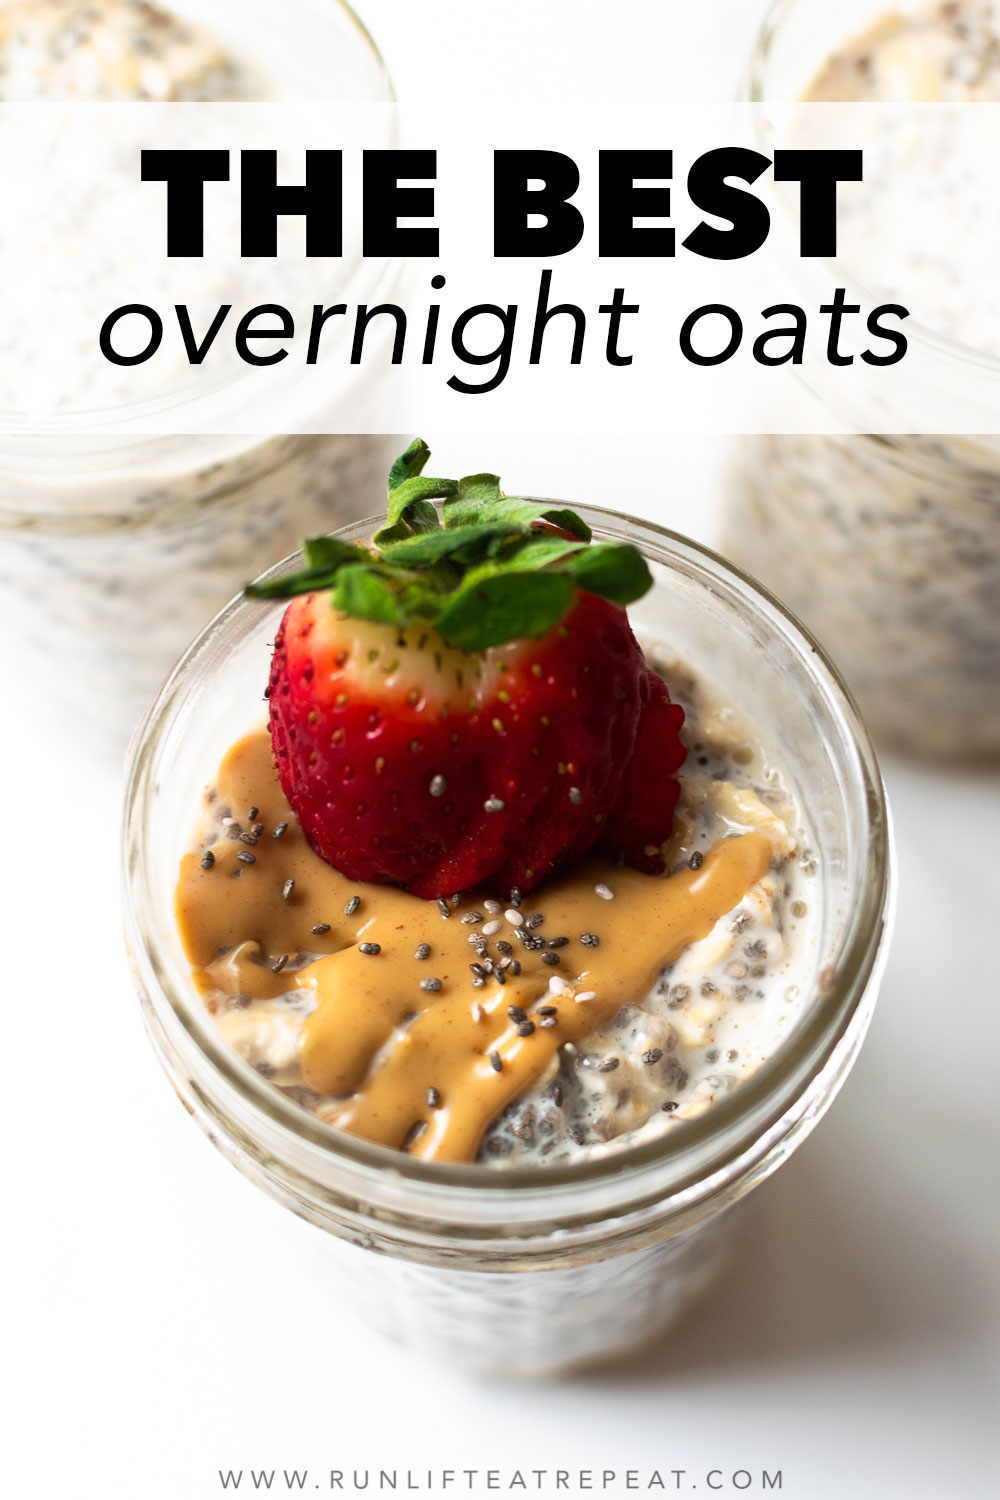 The Best Overnight Oats